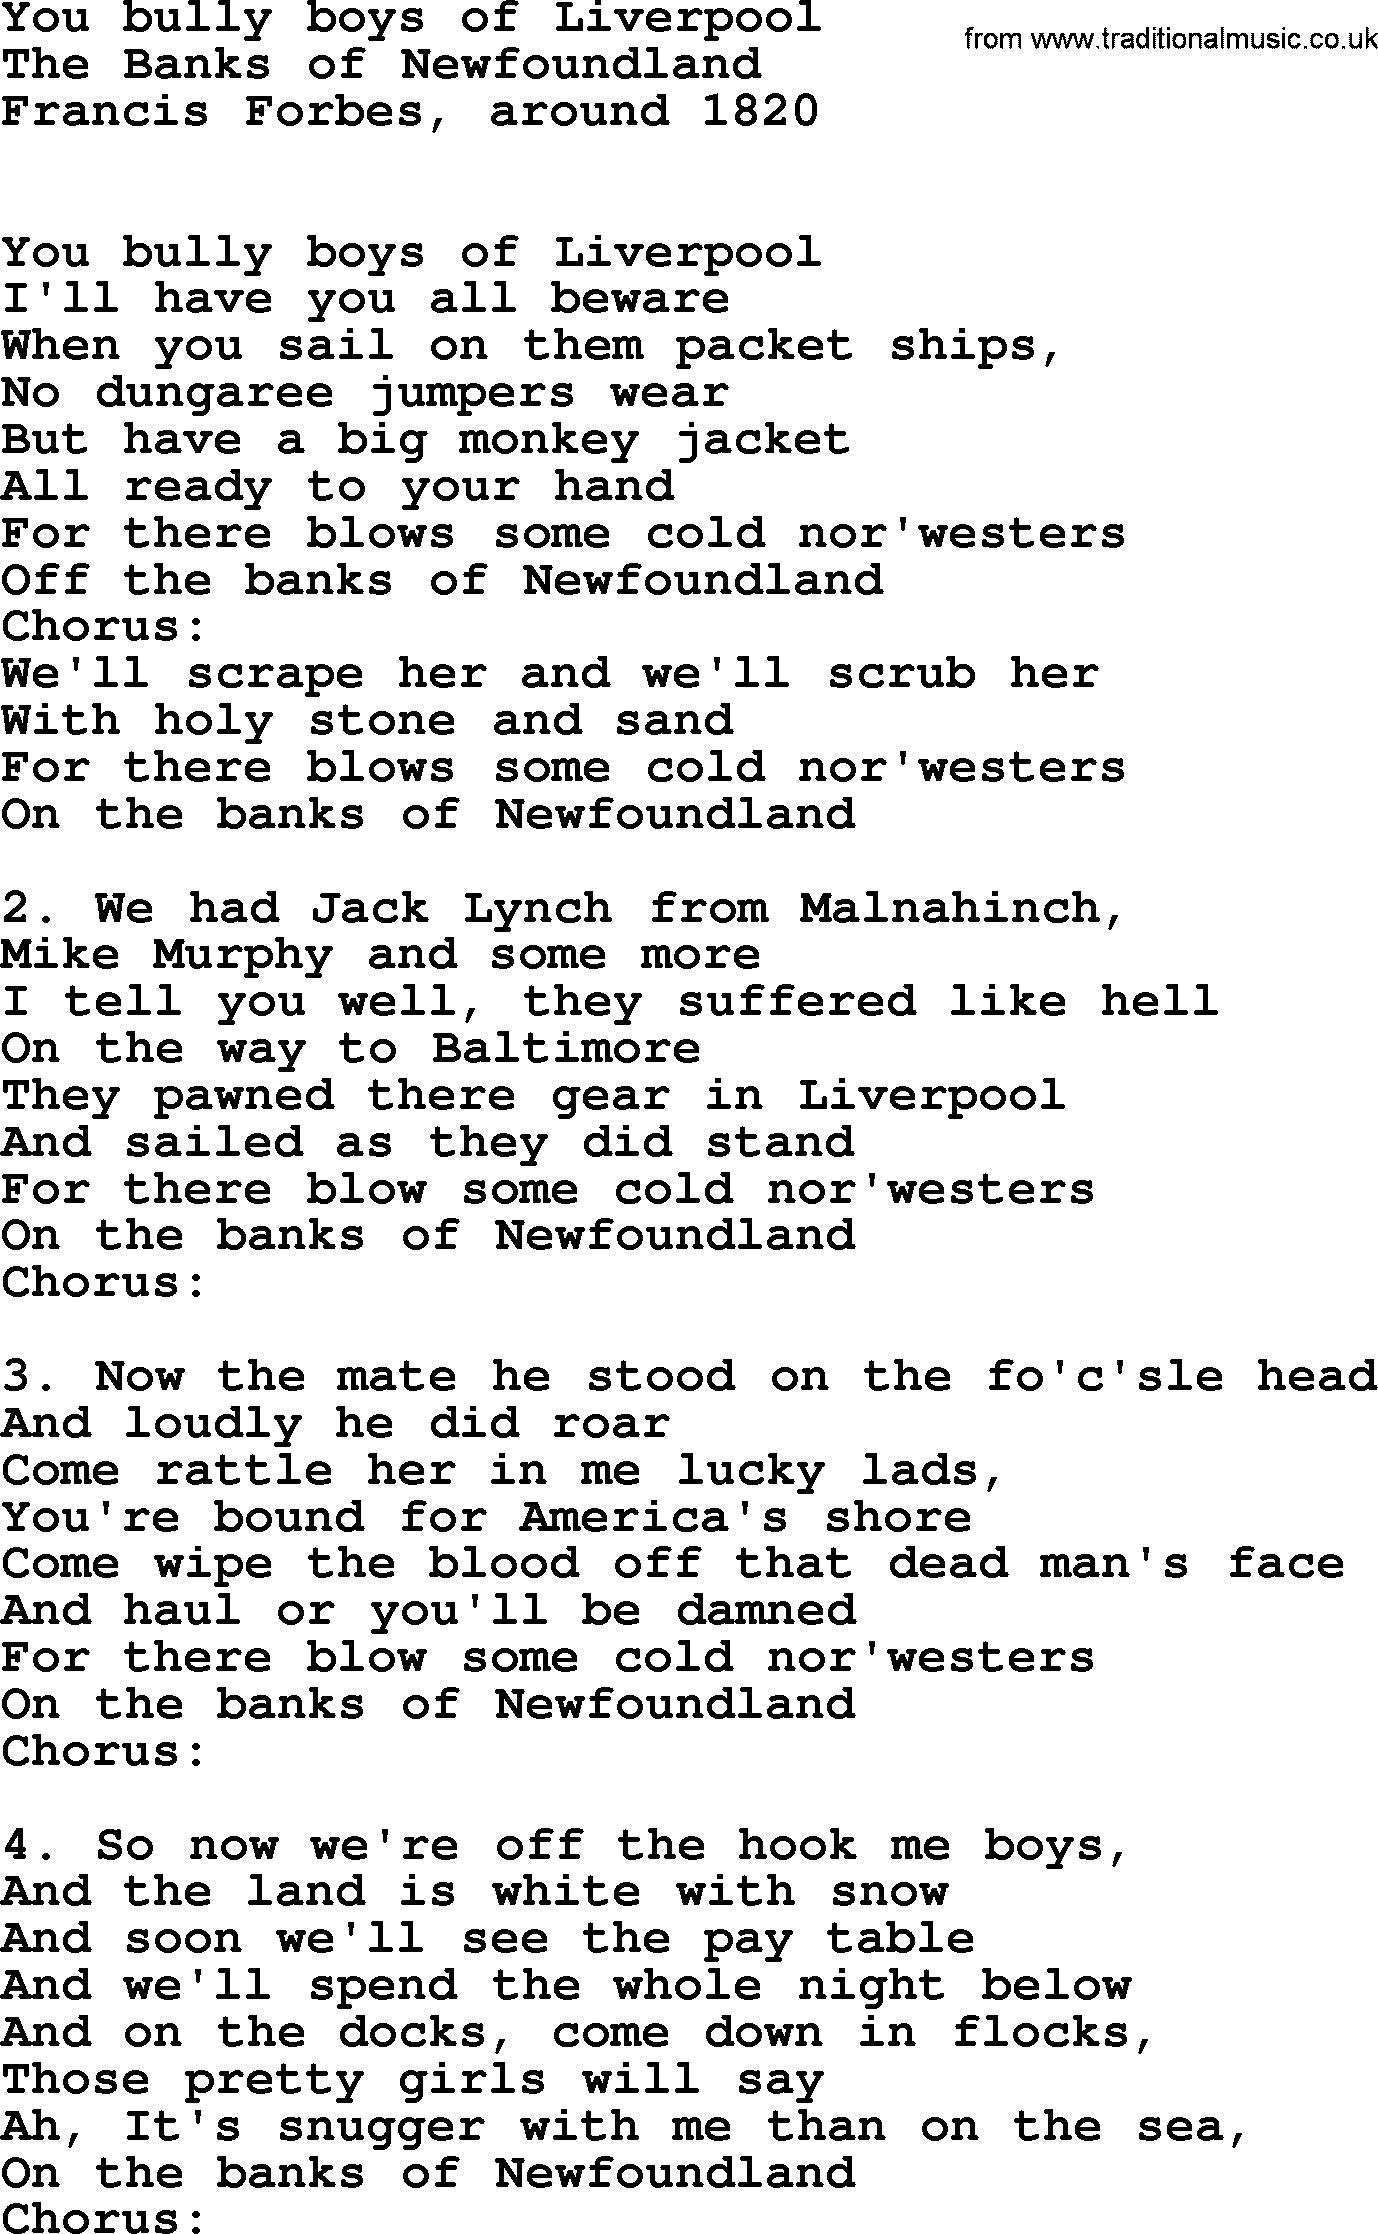 Sea Song or Shantie: You Bully Boys Of Liverpool, lyrics